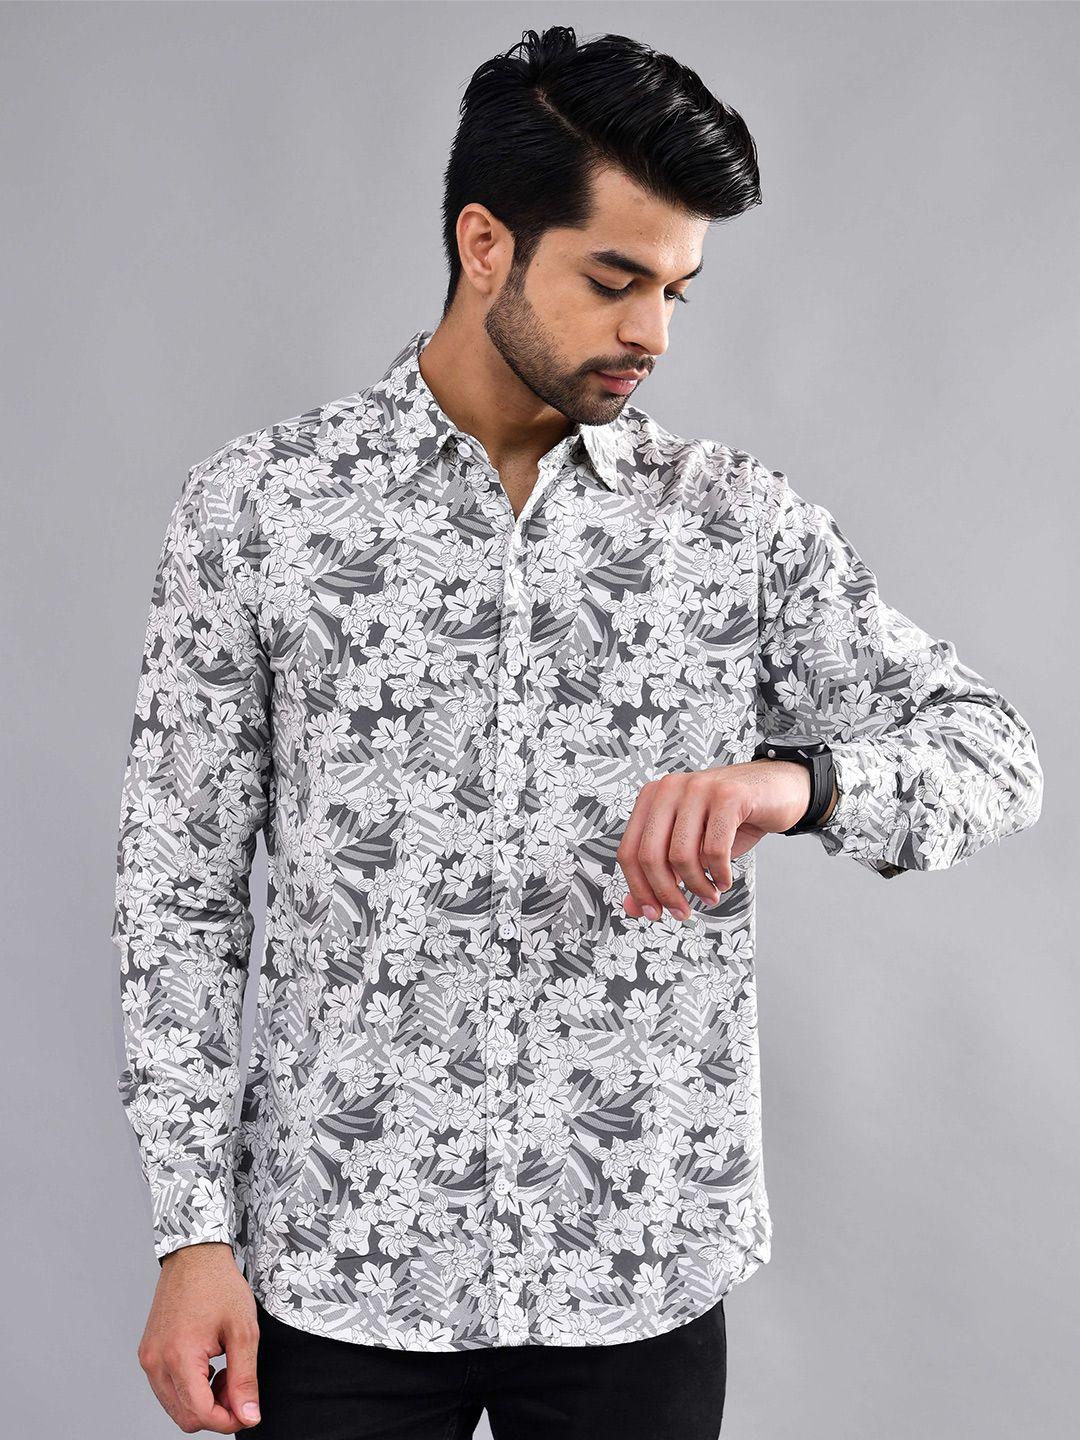 dezano modern regular fit floral printed spread collar casual shirt